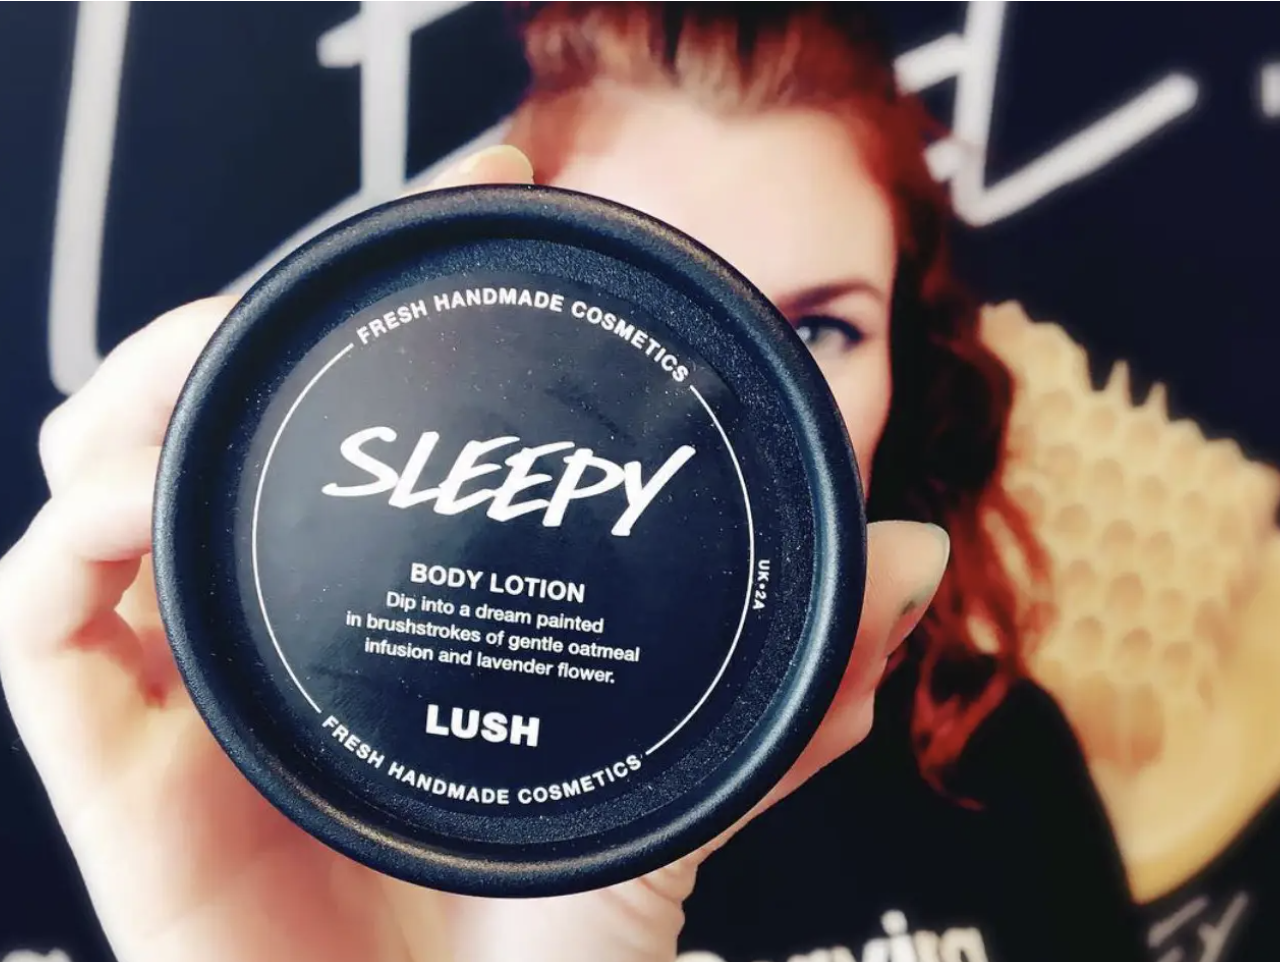 Lush's 'Sleepy' Lotion Knocked Me Out [Insider]